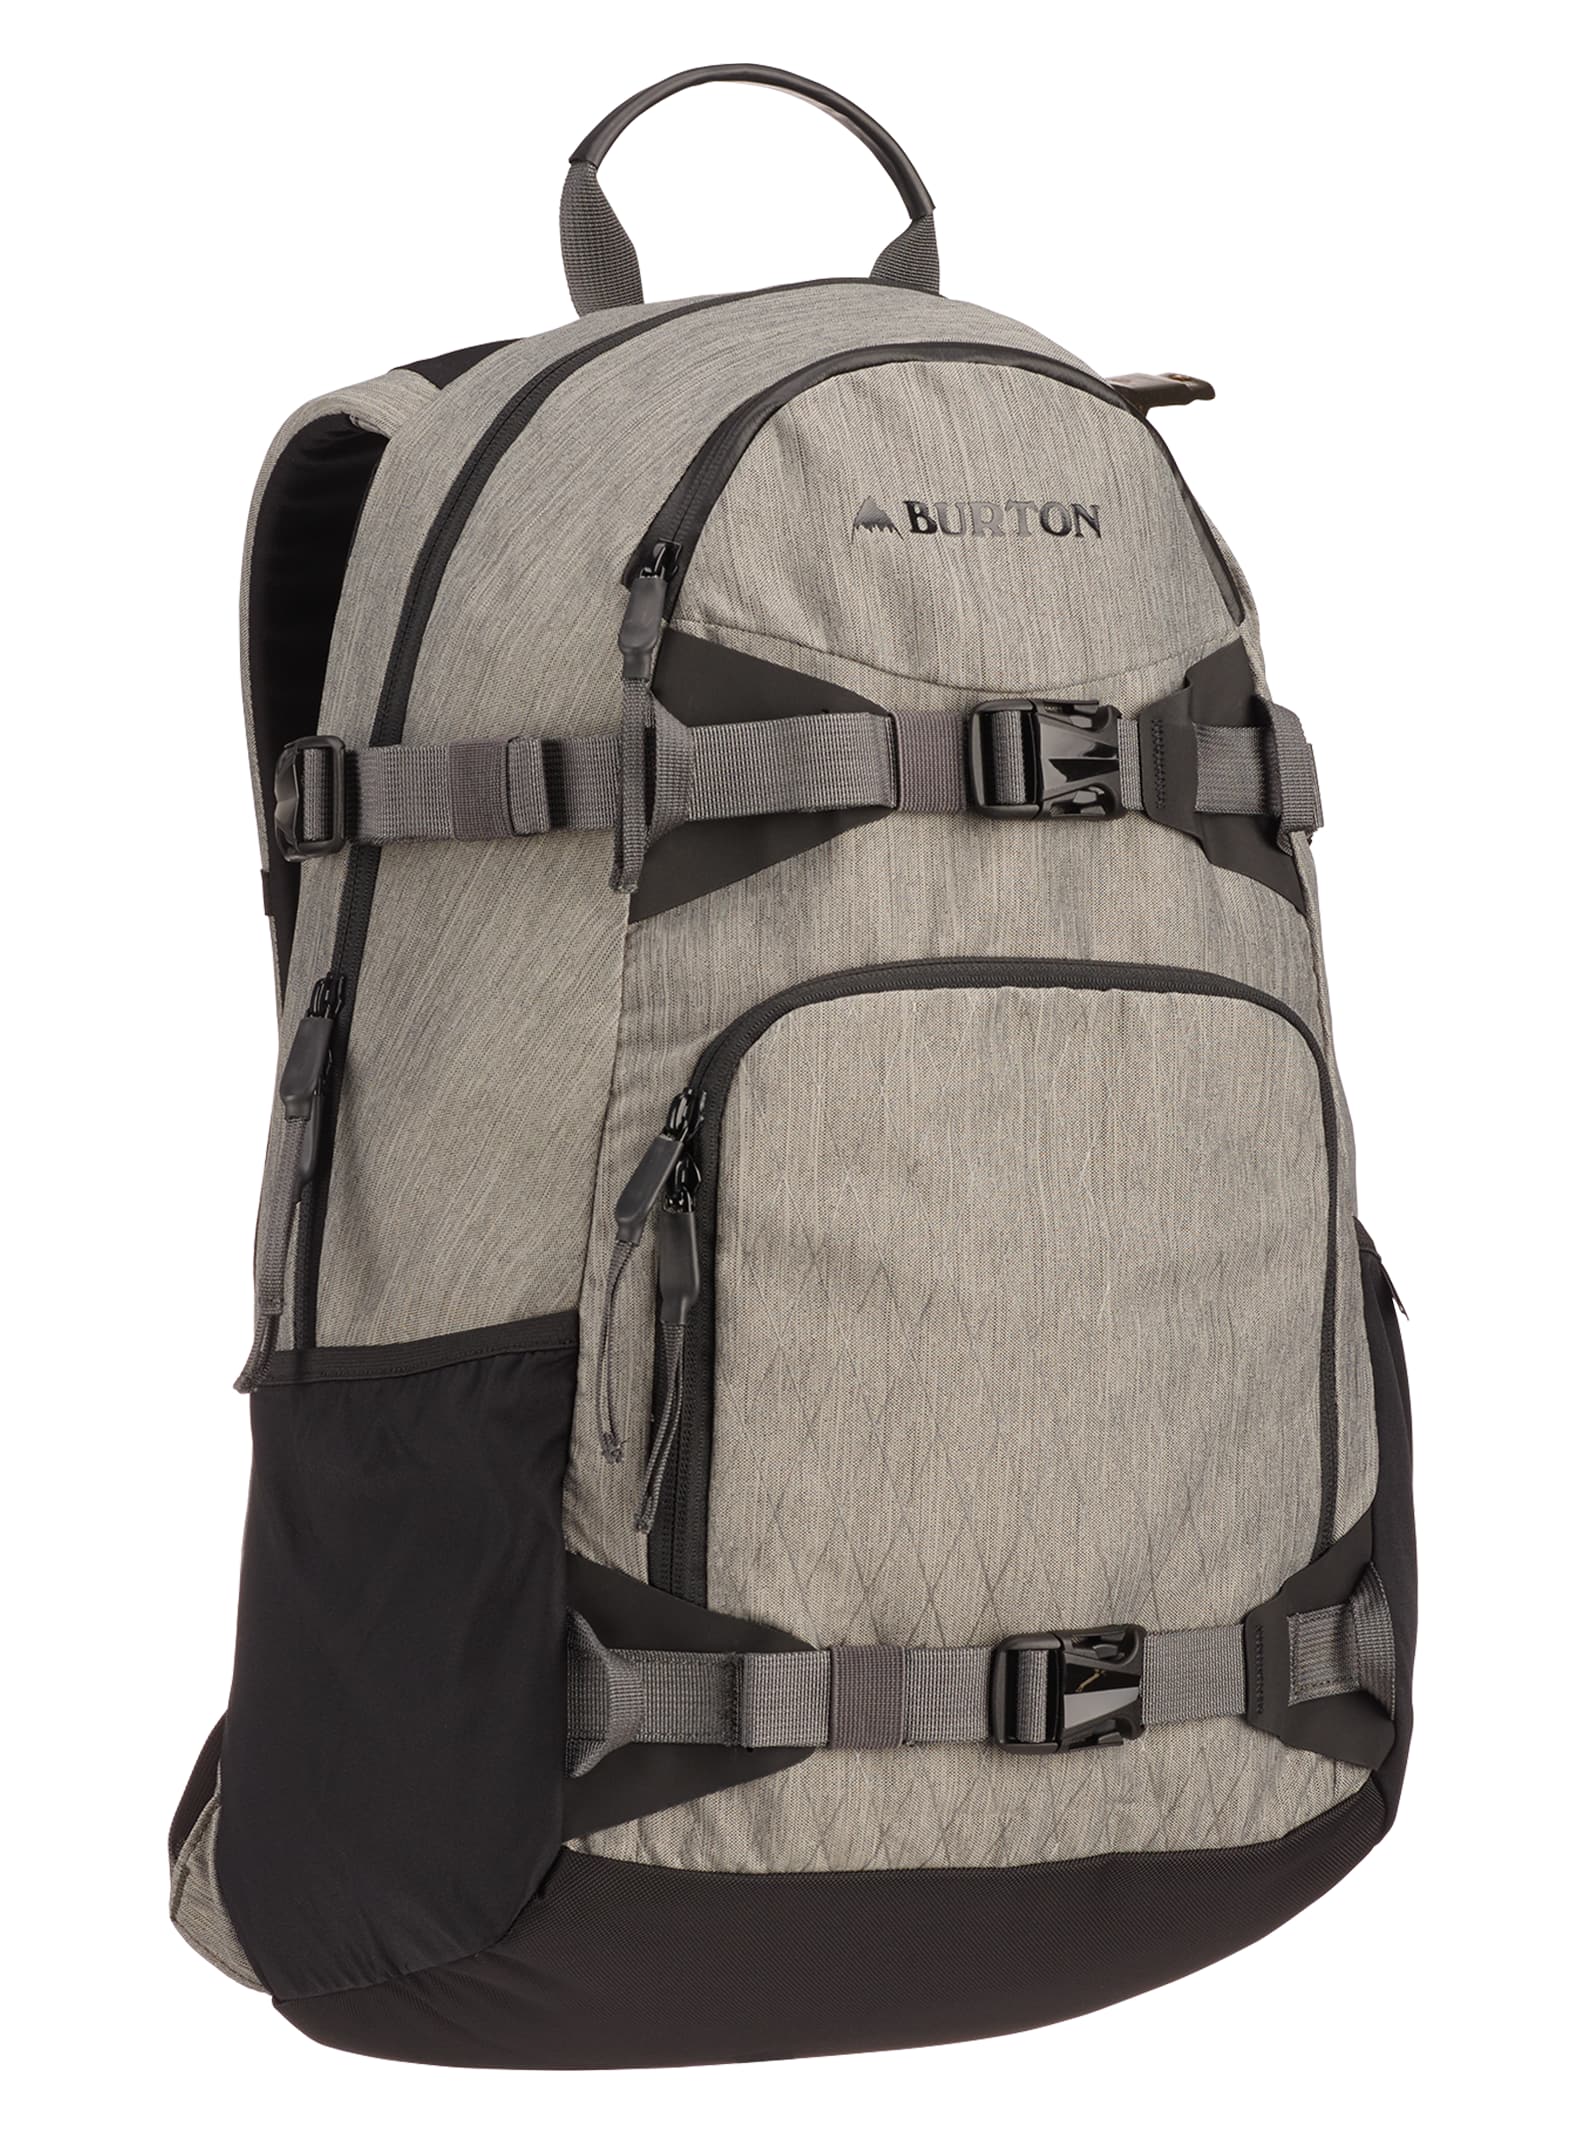 Burton Rider's 2.0 25L Backpack | Burton.com Winter 2021 US